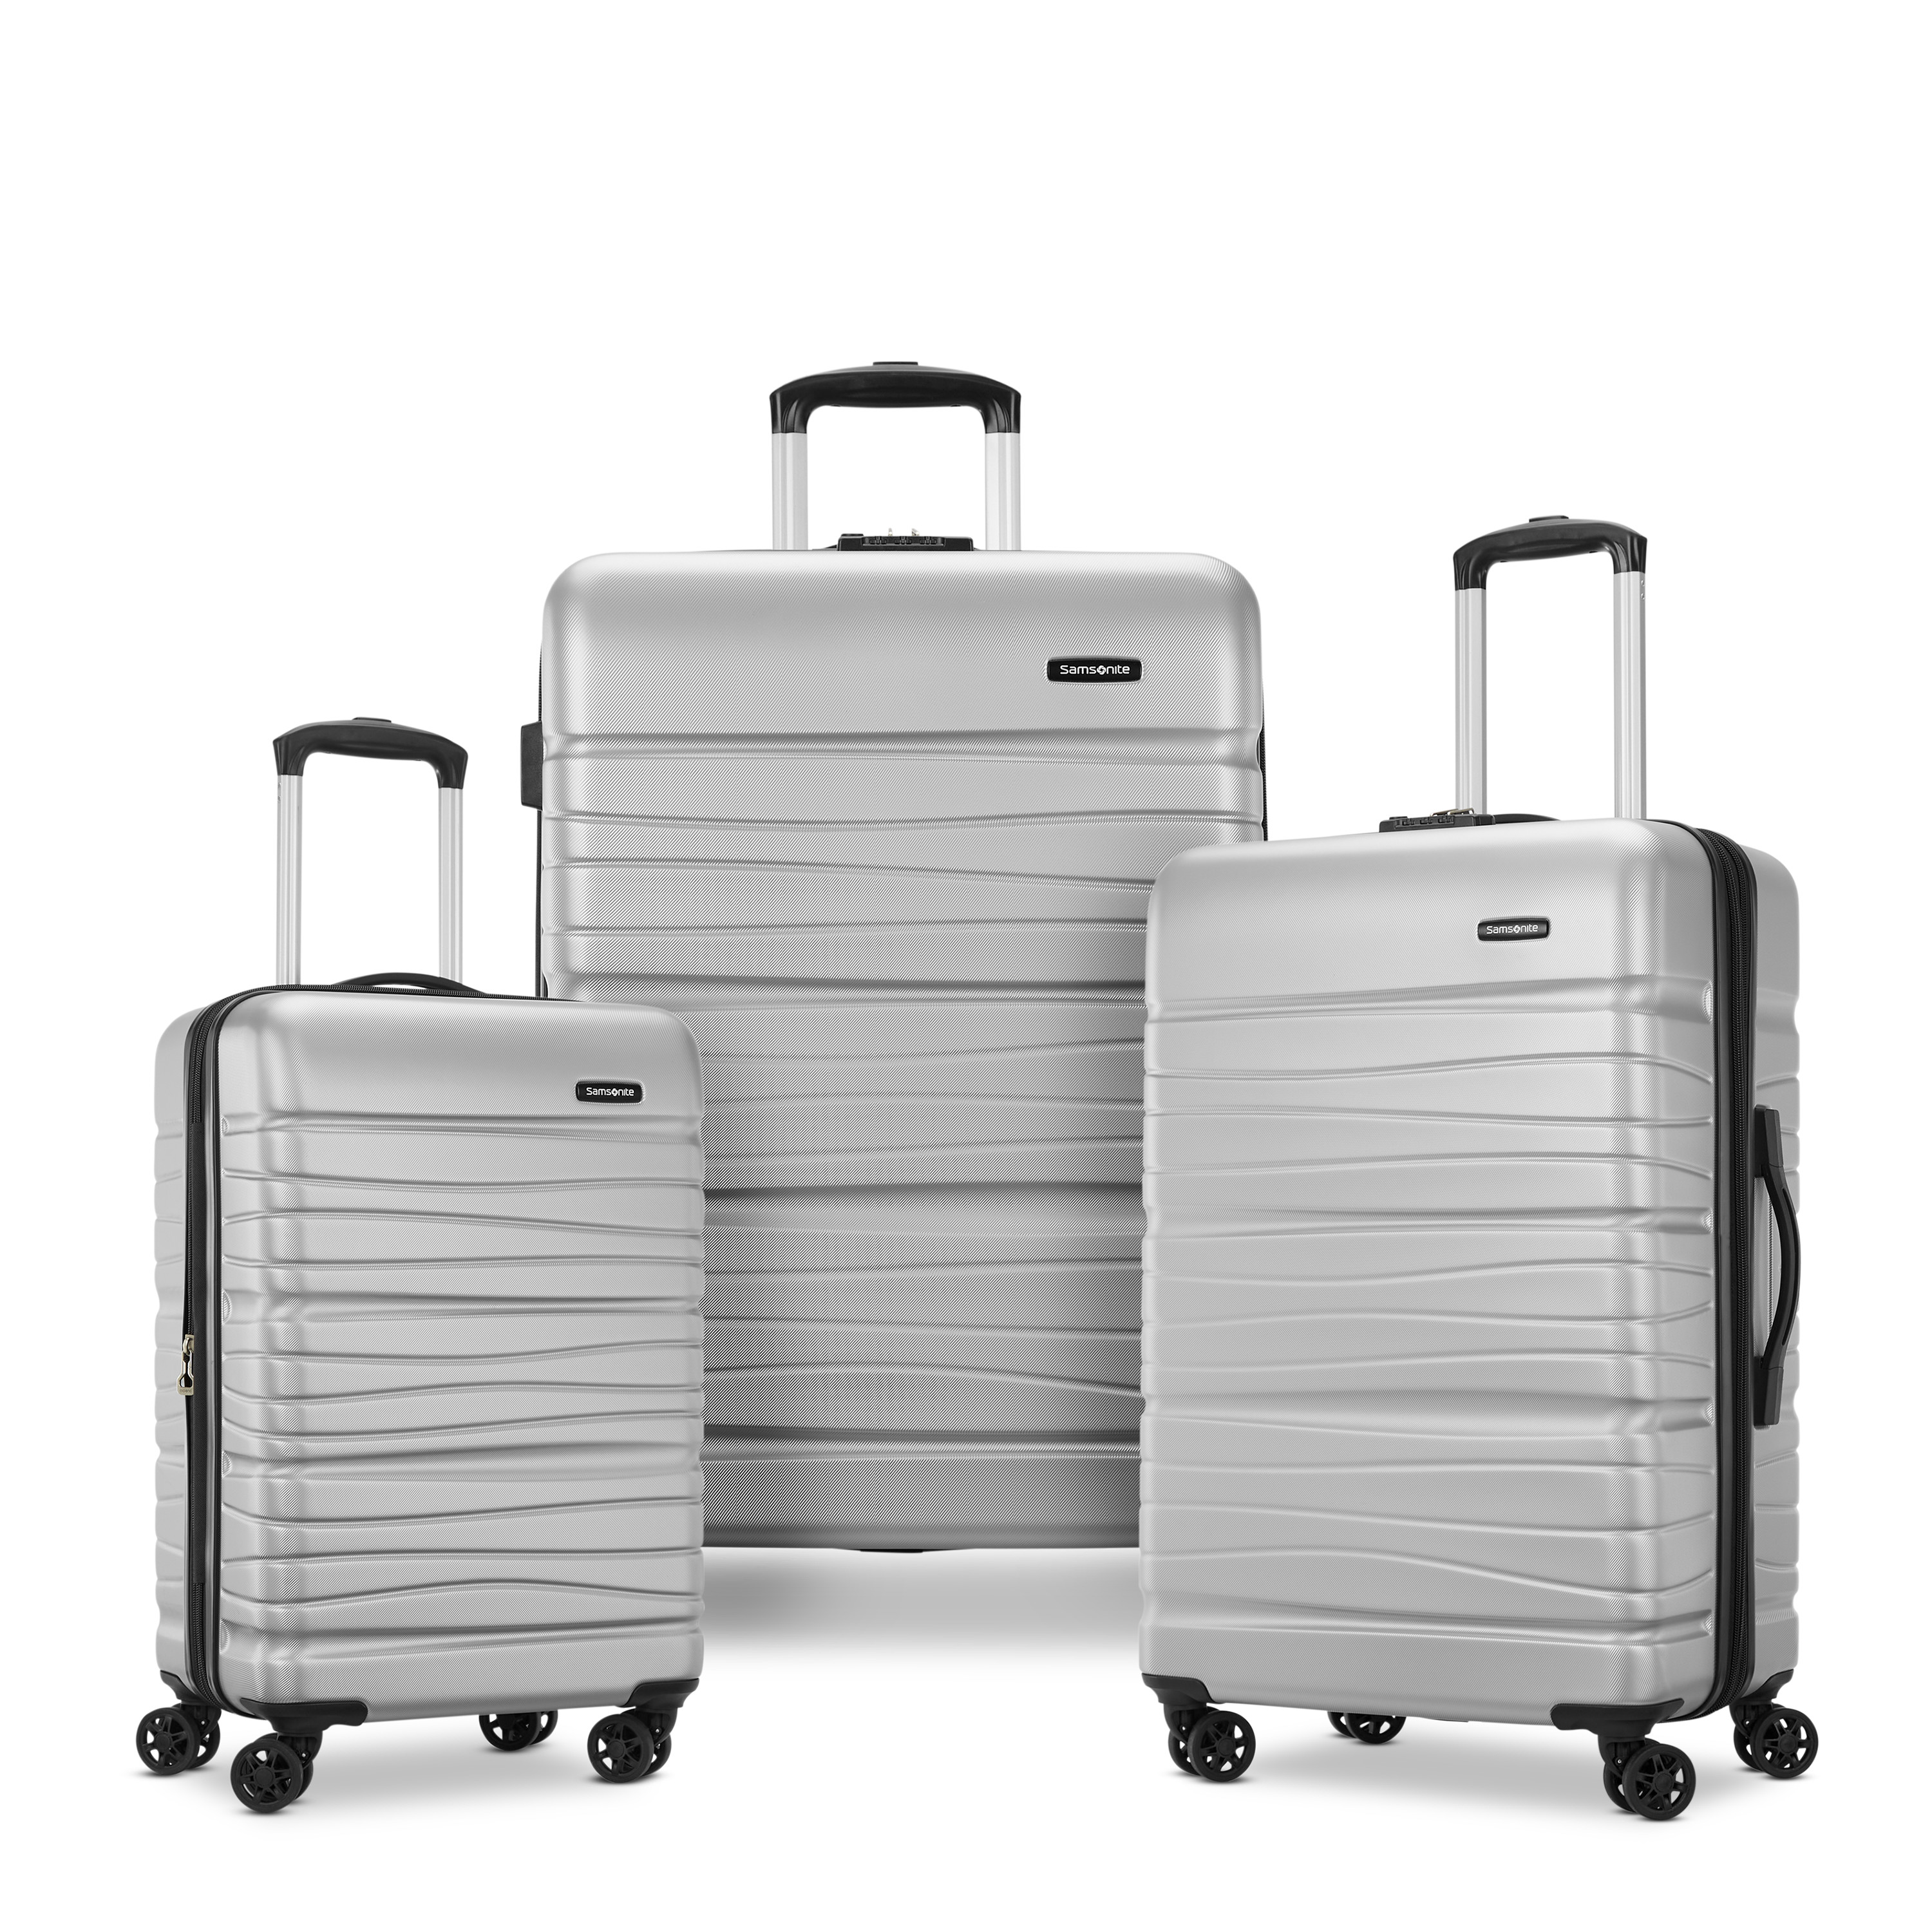 Samsonite 3 Piece Hardside Set - Luggage